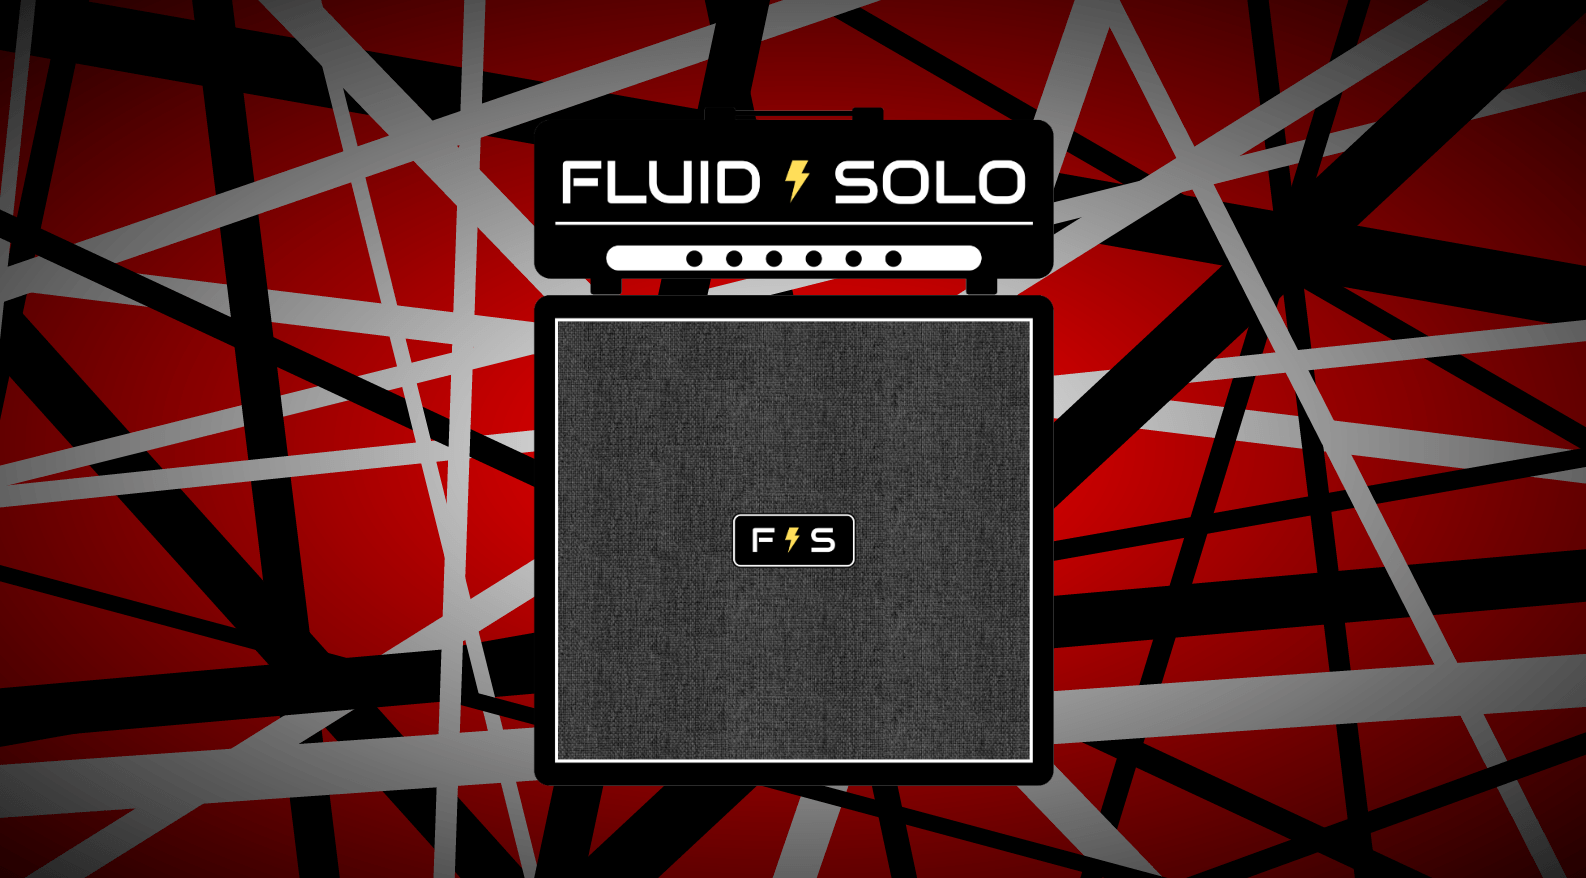 Fluid Solo honors EVH